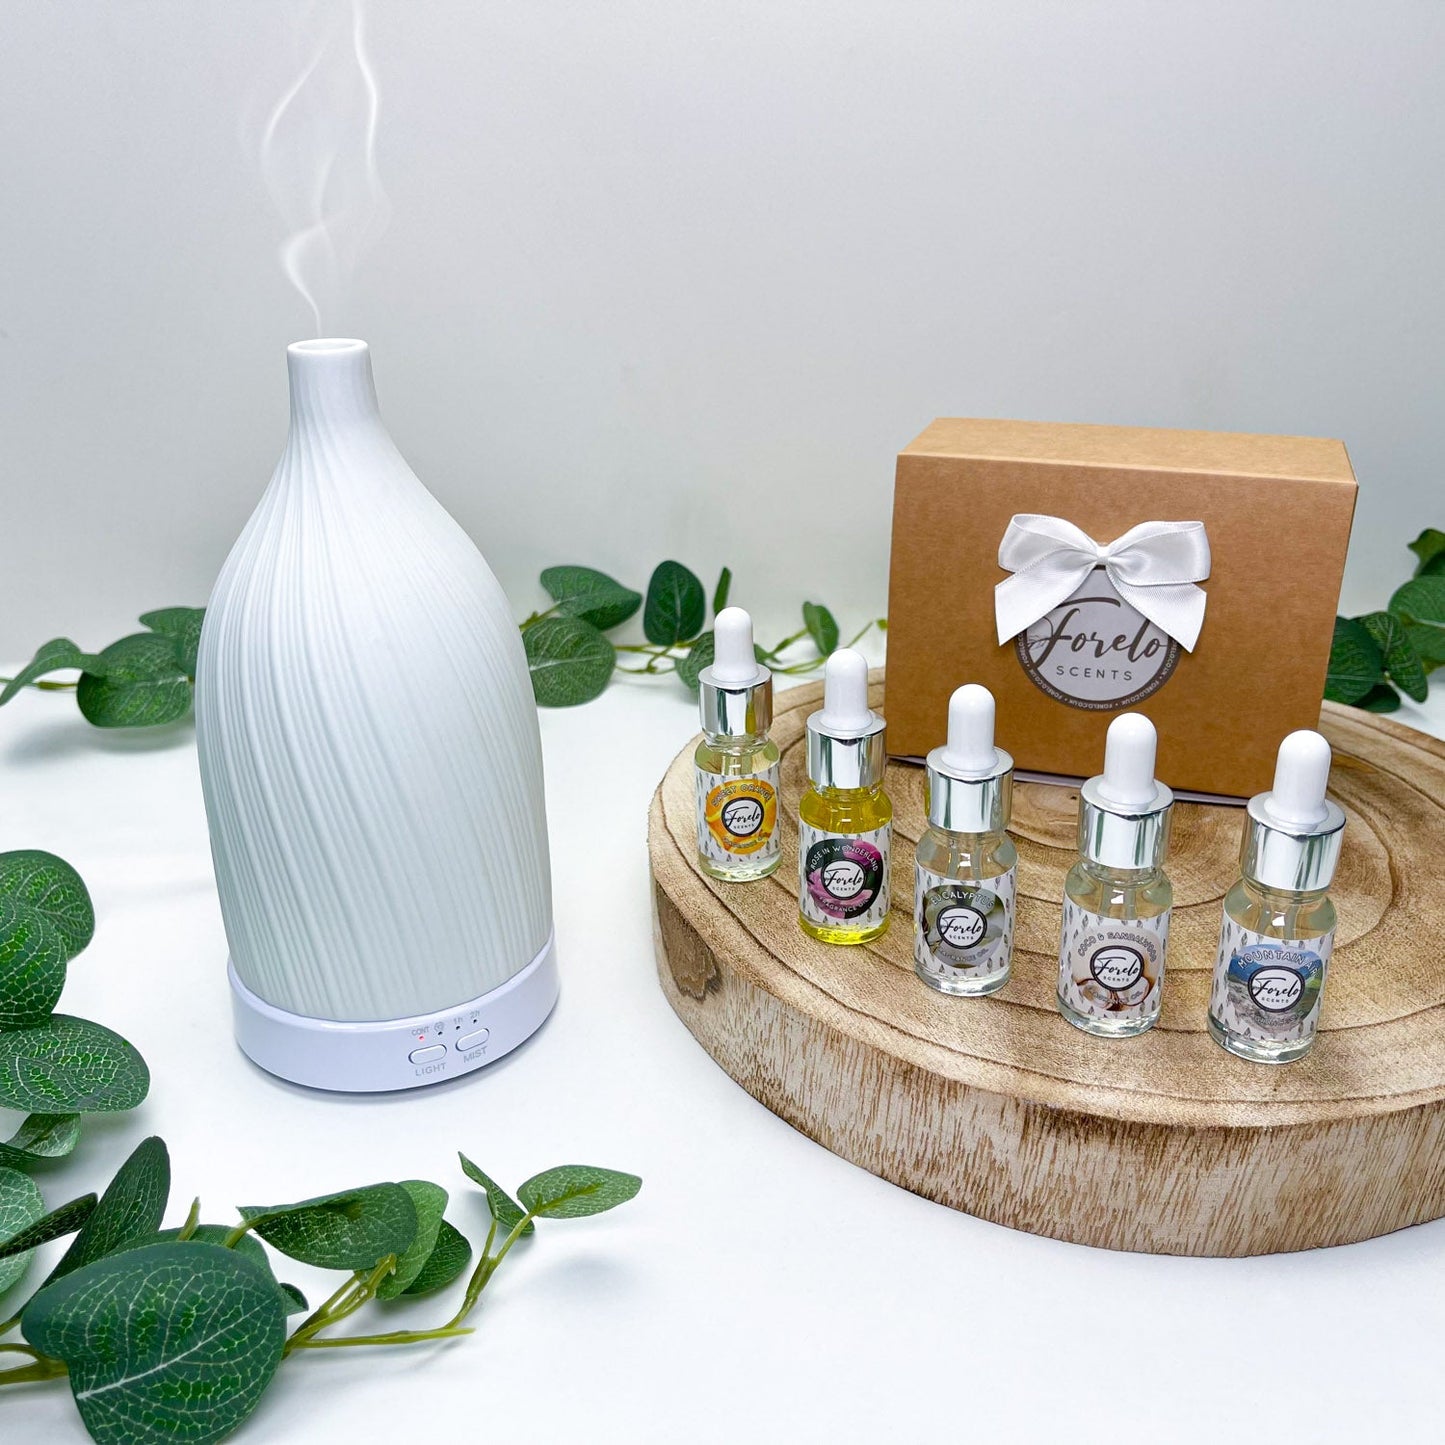 Fragrance Oil & Diffuser Gift Set